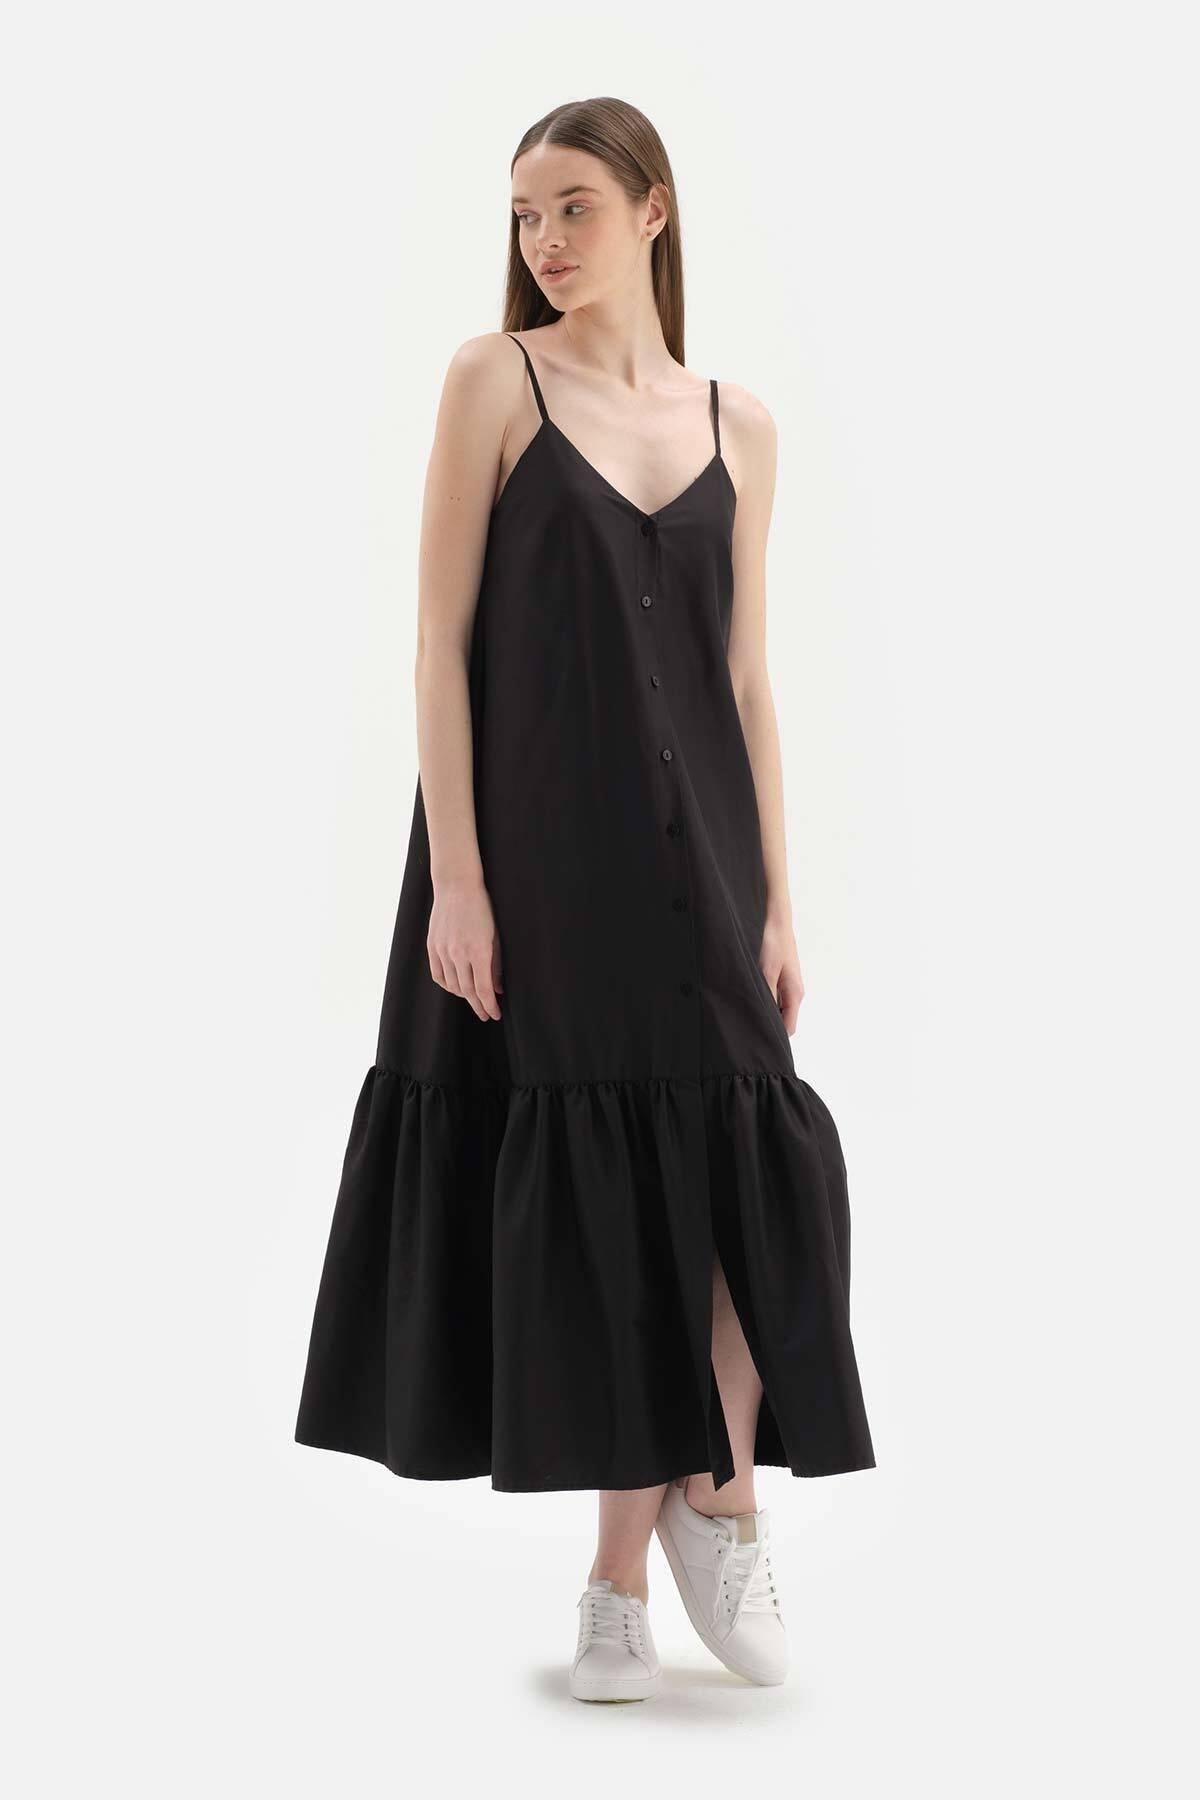 Dagi - Black Buttoned Woven Dress